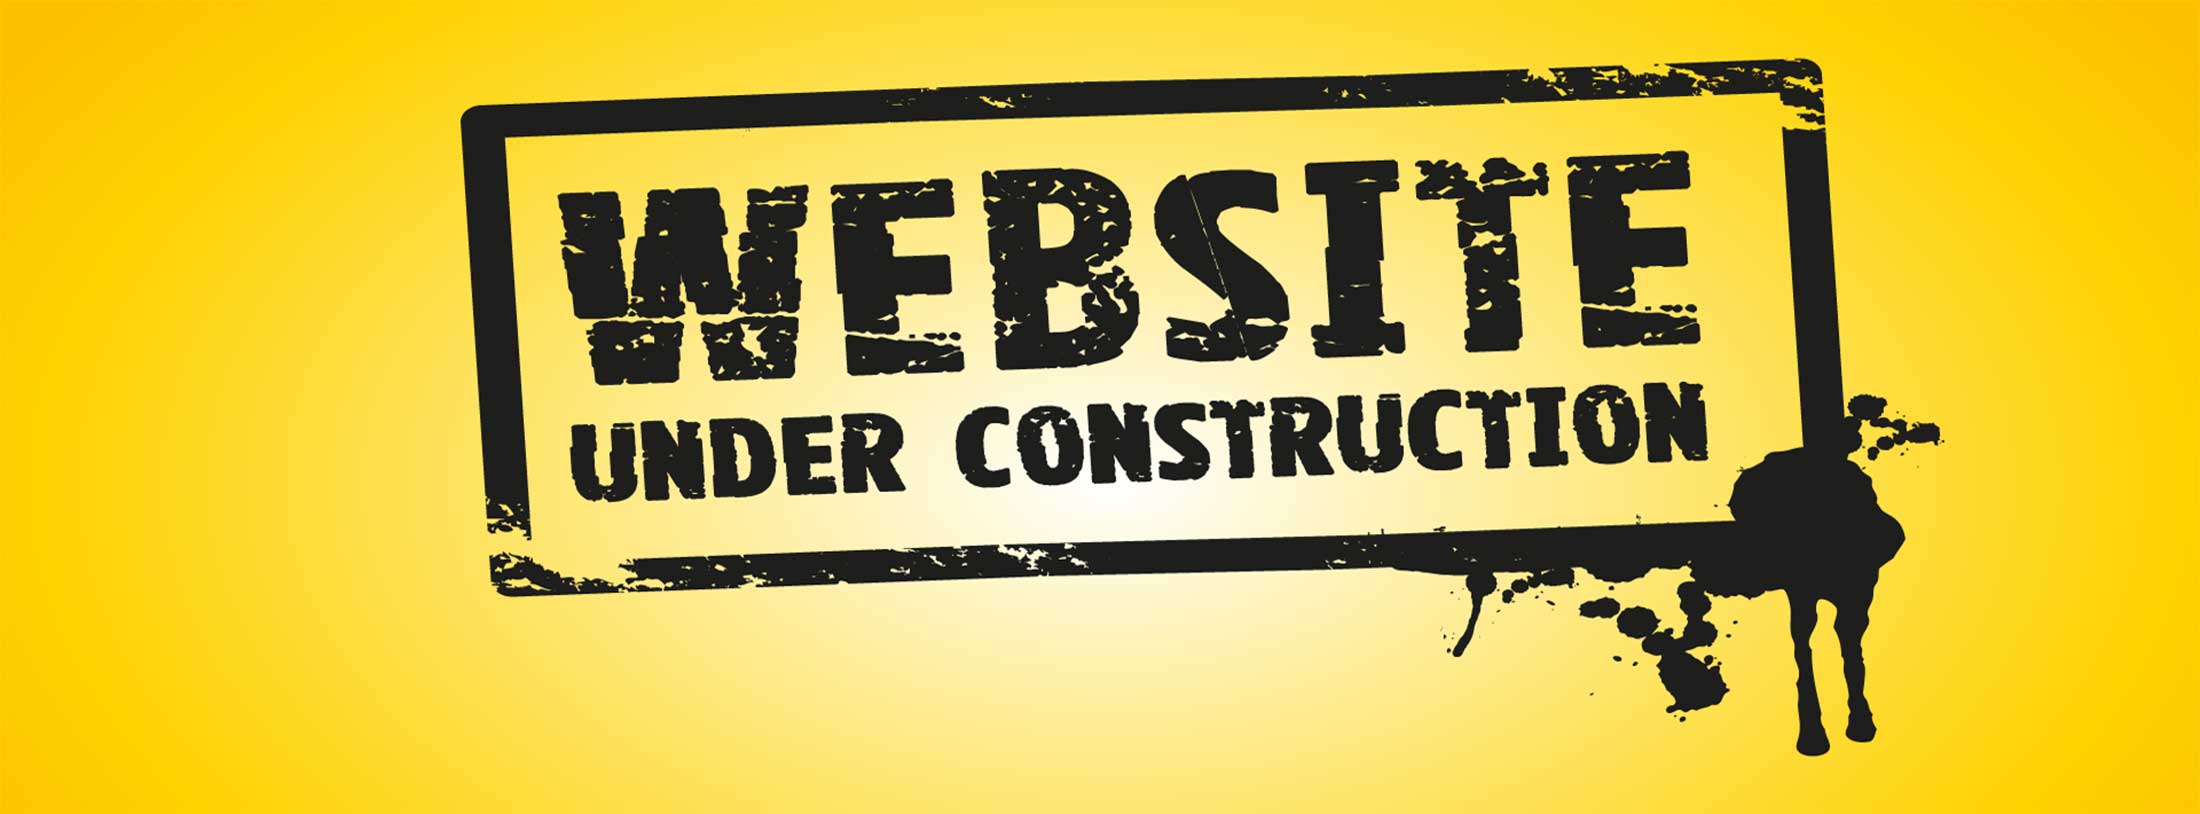 website-under-construction-yellow